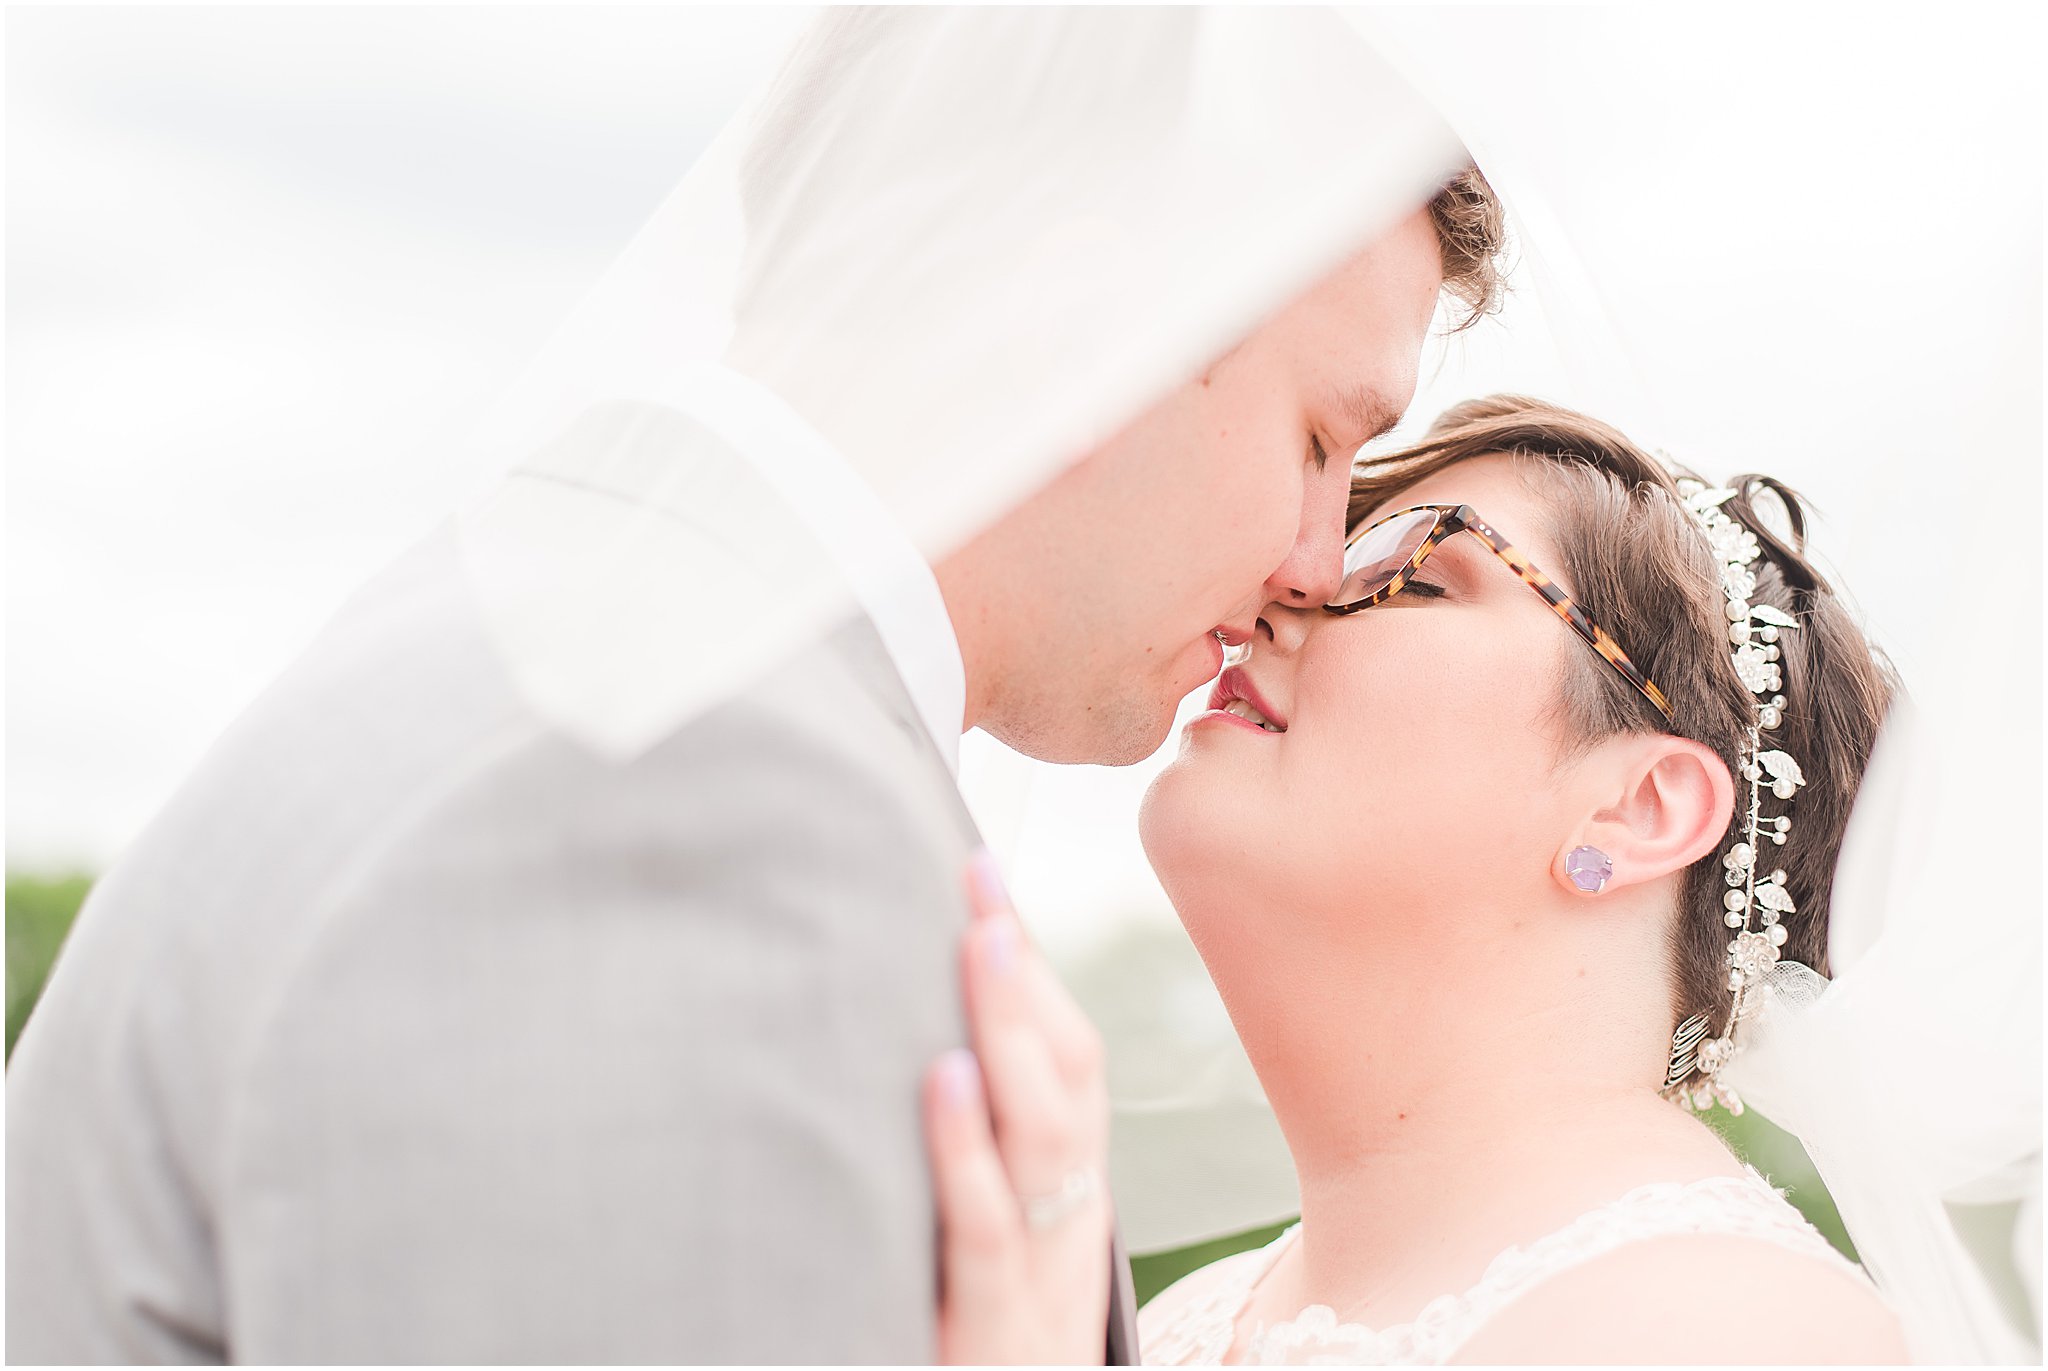 Bride and groom kissing under their wedding veil 